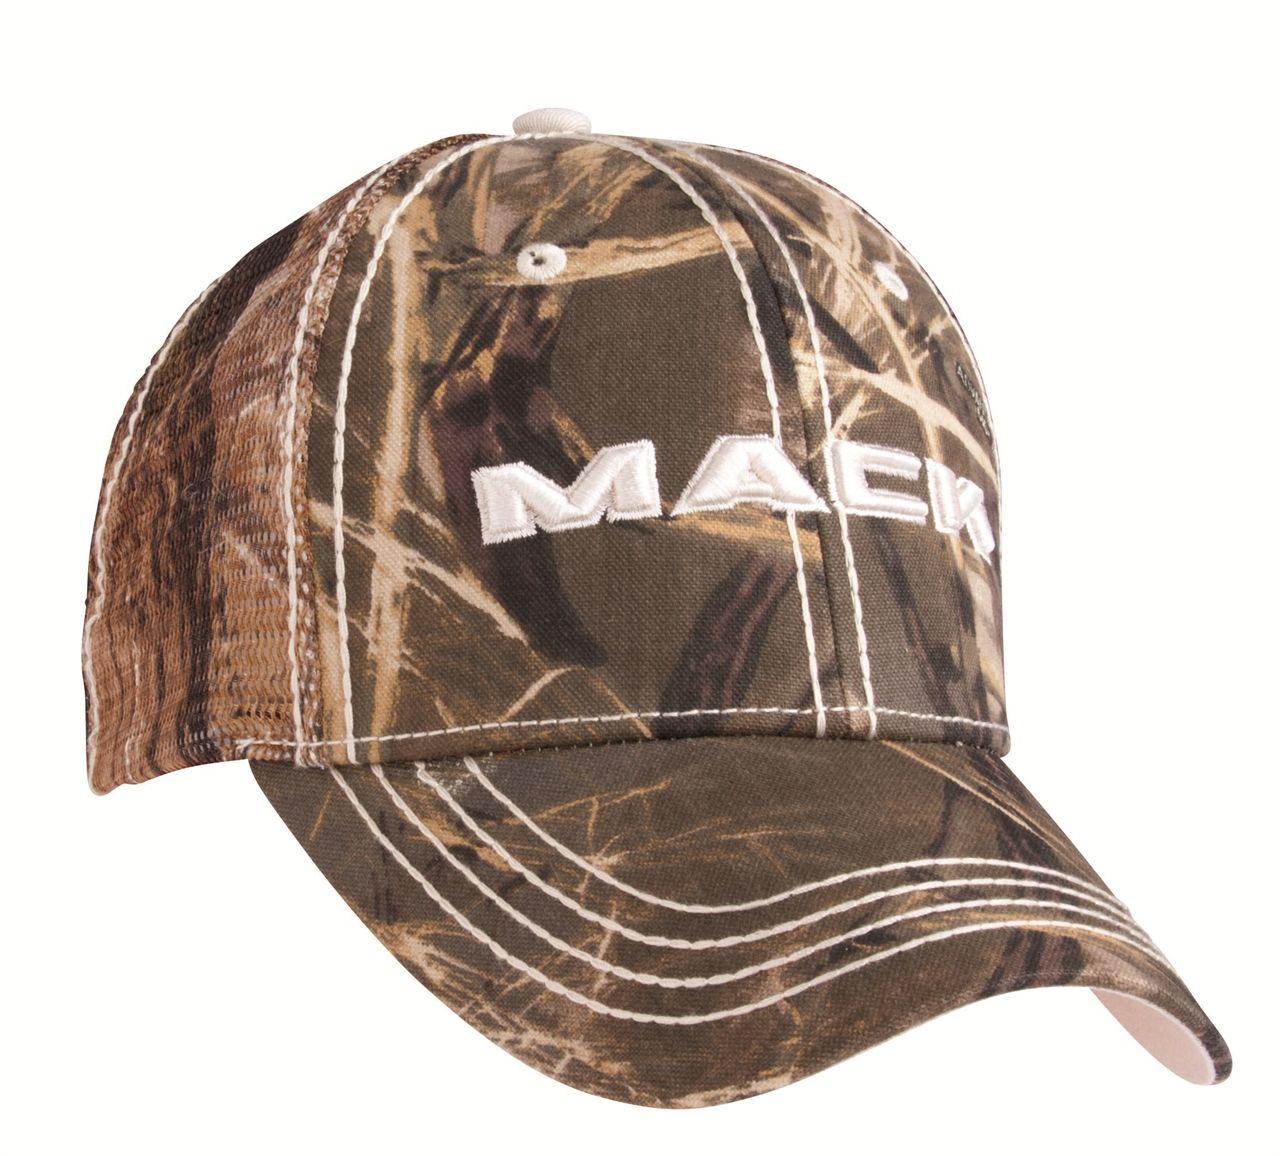 Camo Mack Logo - MACK FRONT GRILL LOGO CAMO MESH CAP